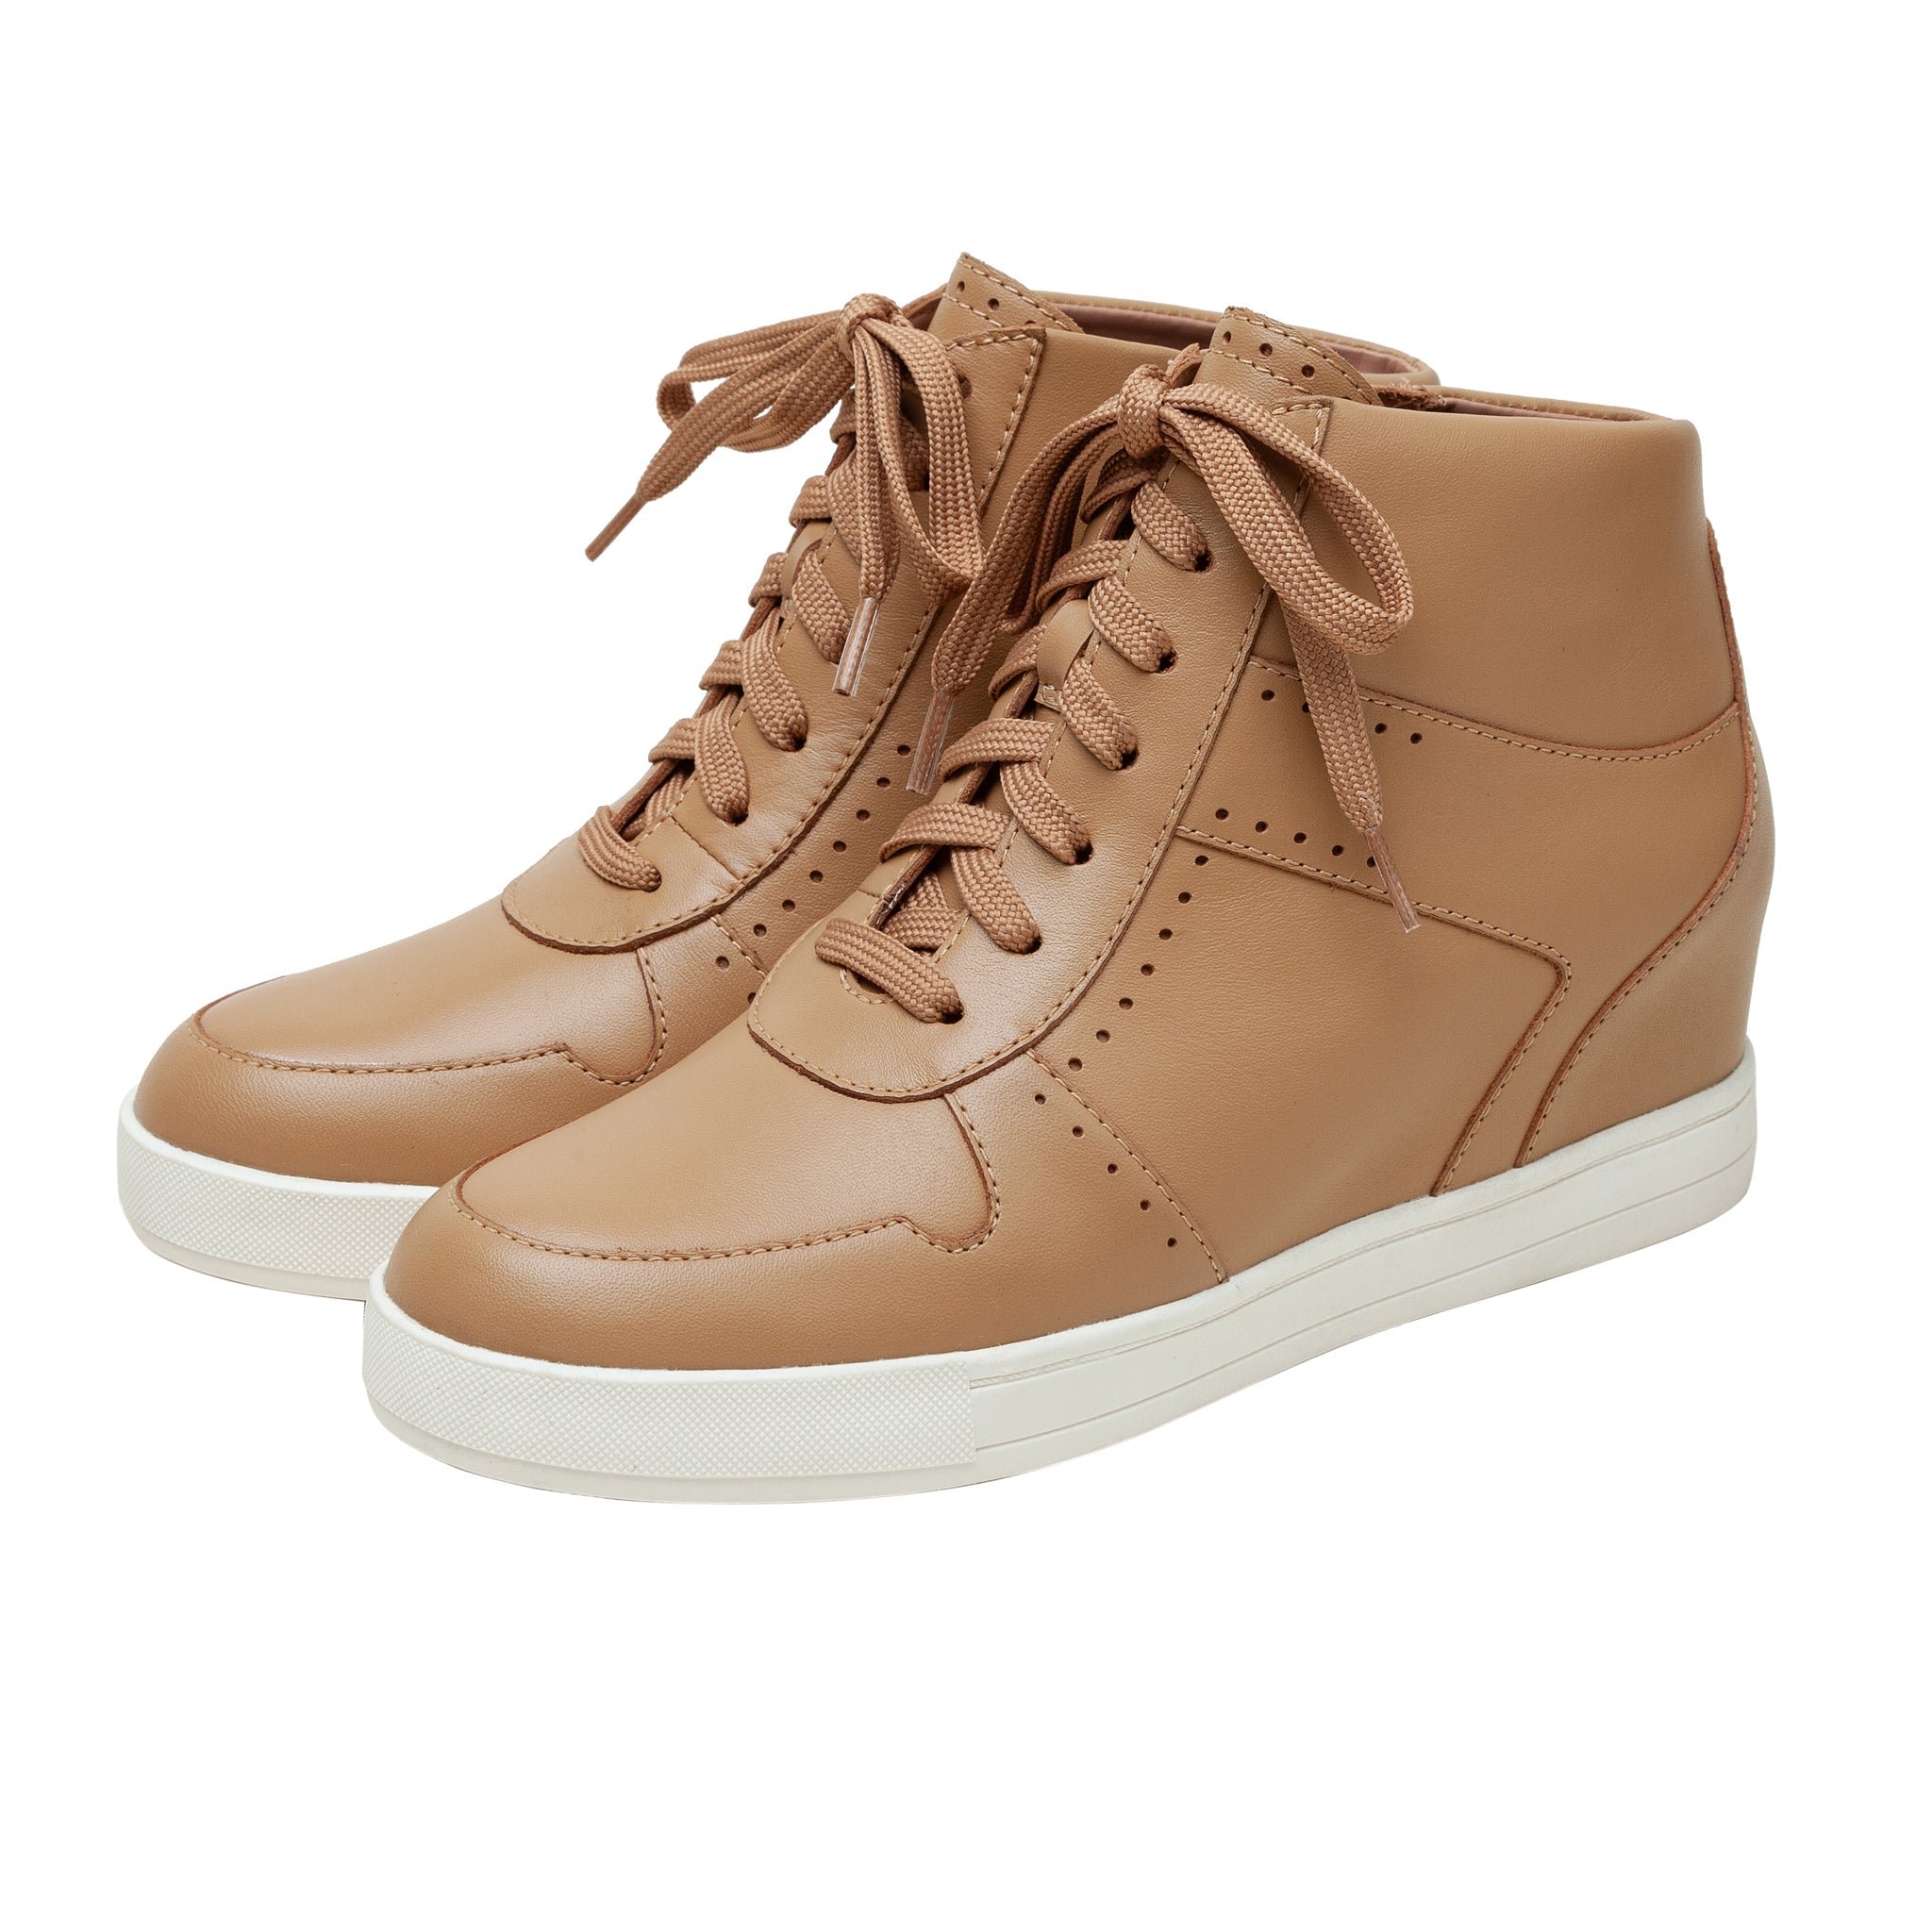 Leather wedge sneakers - ASH - Ginevra calzature